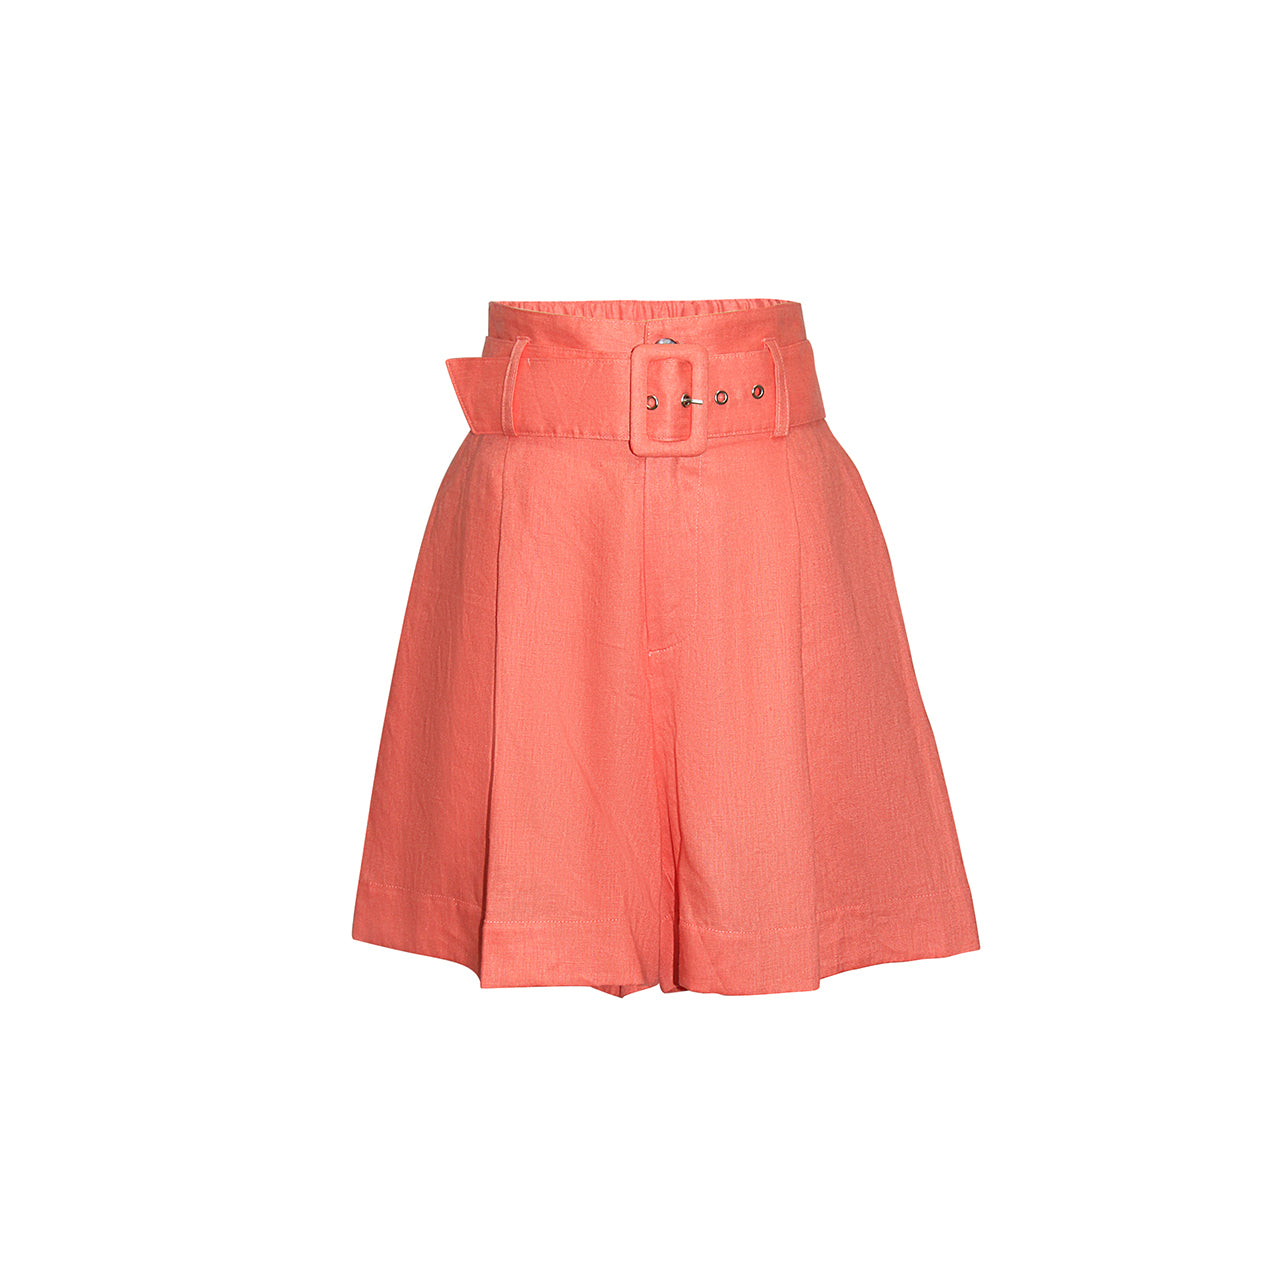 Shop NOVA Linen Shorts in Coral Online